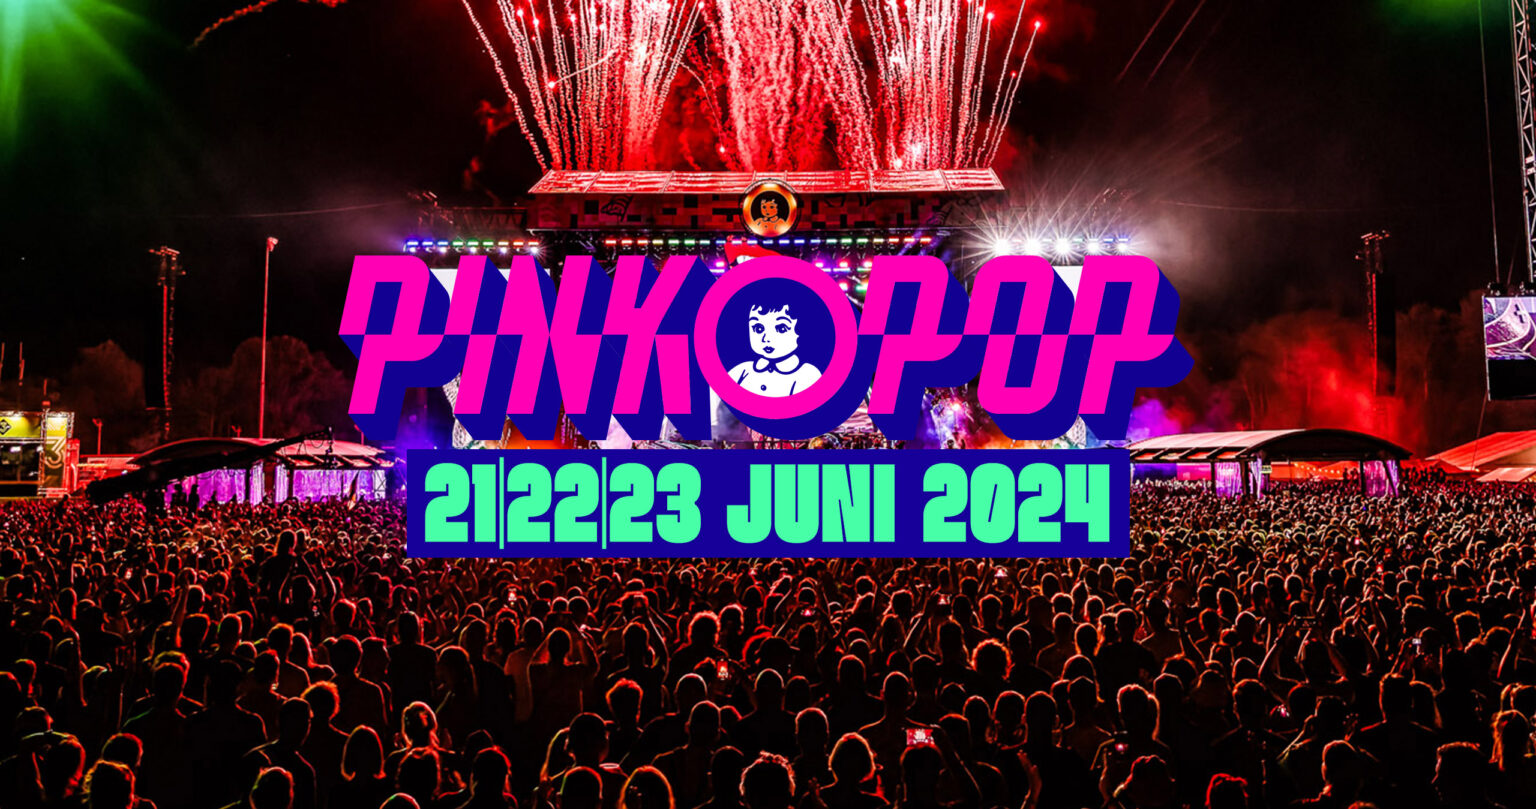 Pinkpop Festival 212223 juni 2024 Megaland Landgraaf